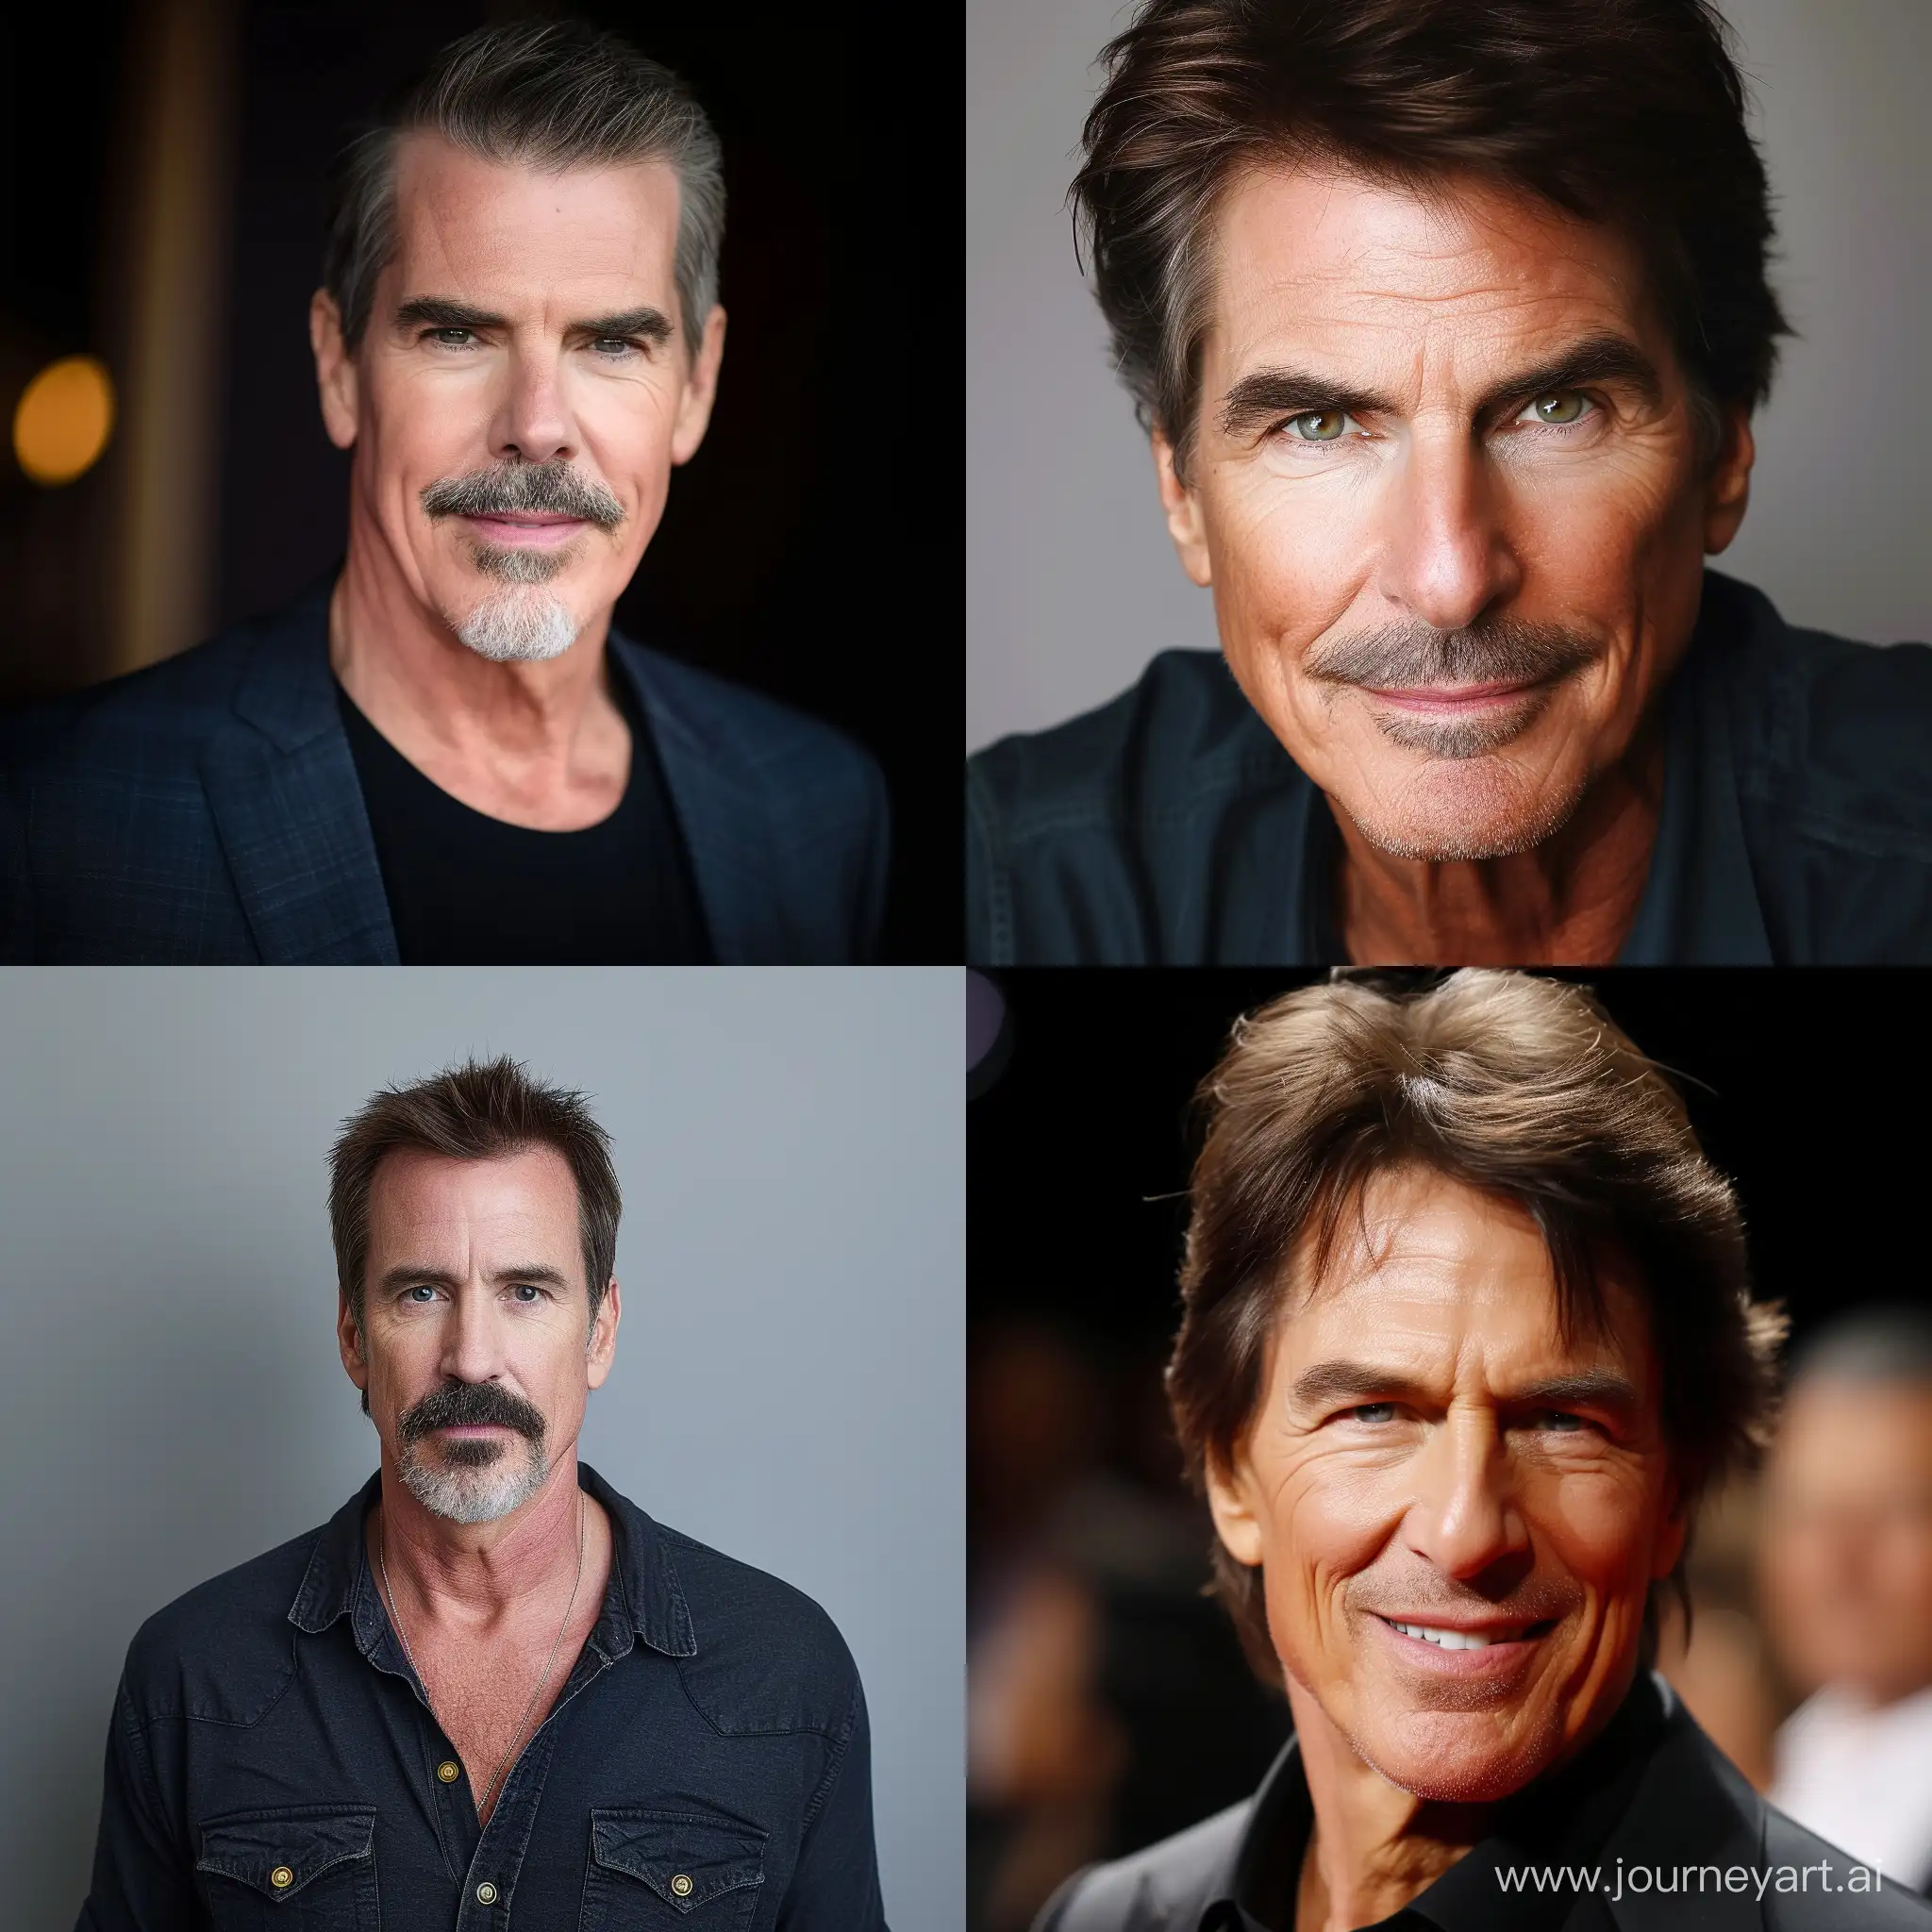 Steve-Celebrity-Portrait-in-Vibrant-Colors